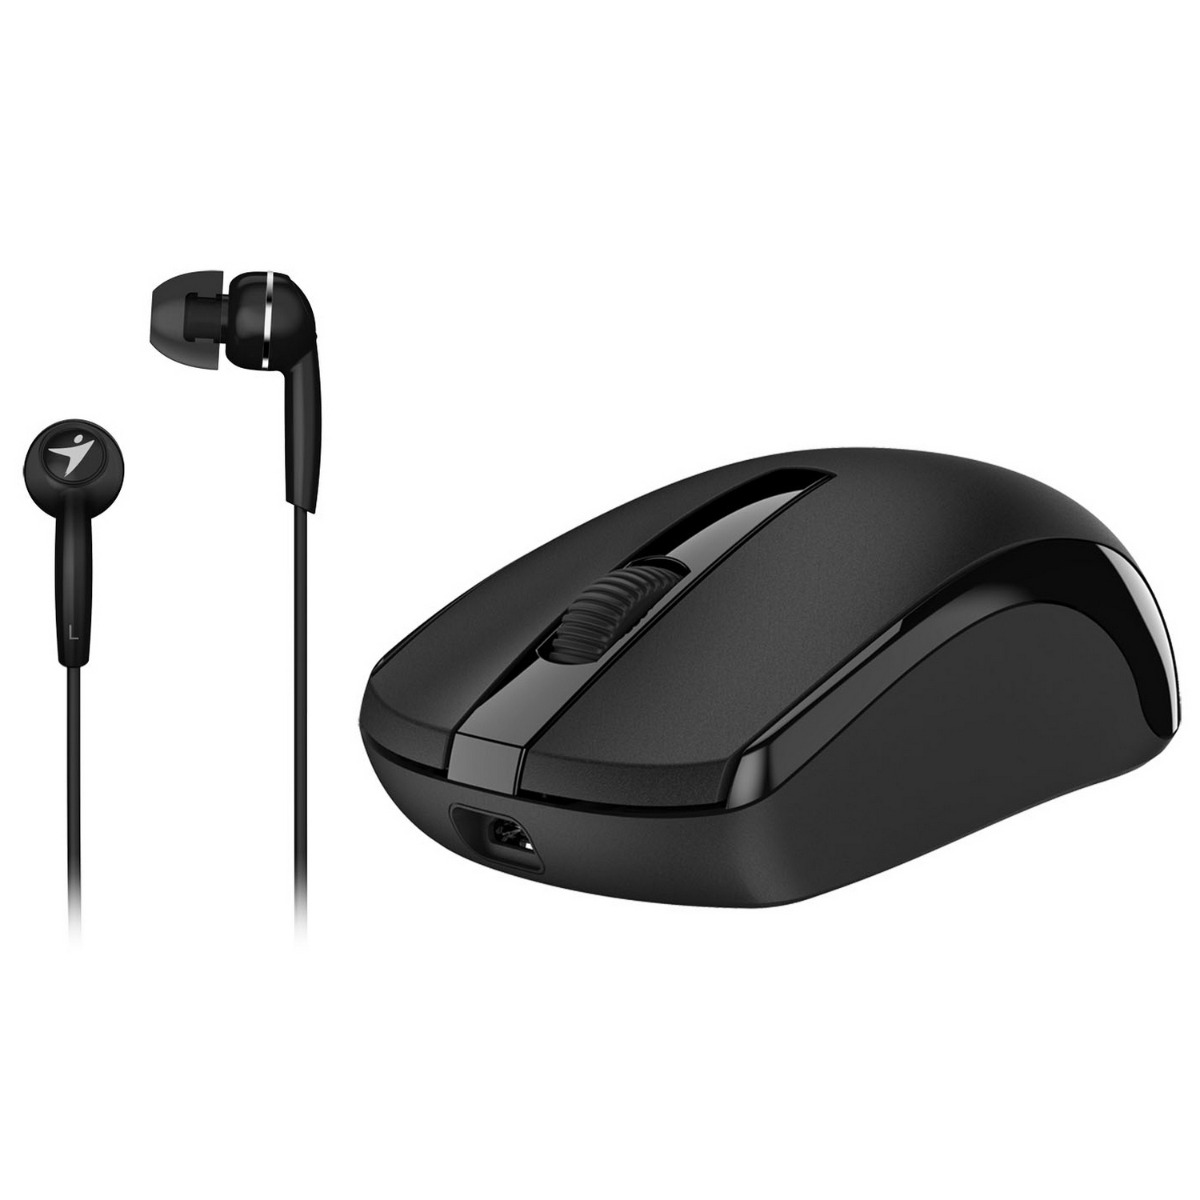 Genius Wireless Mouse + Headset (Black) MH-8100